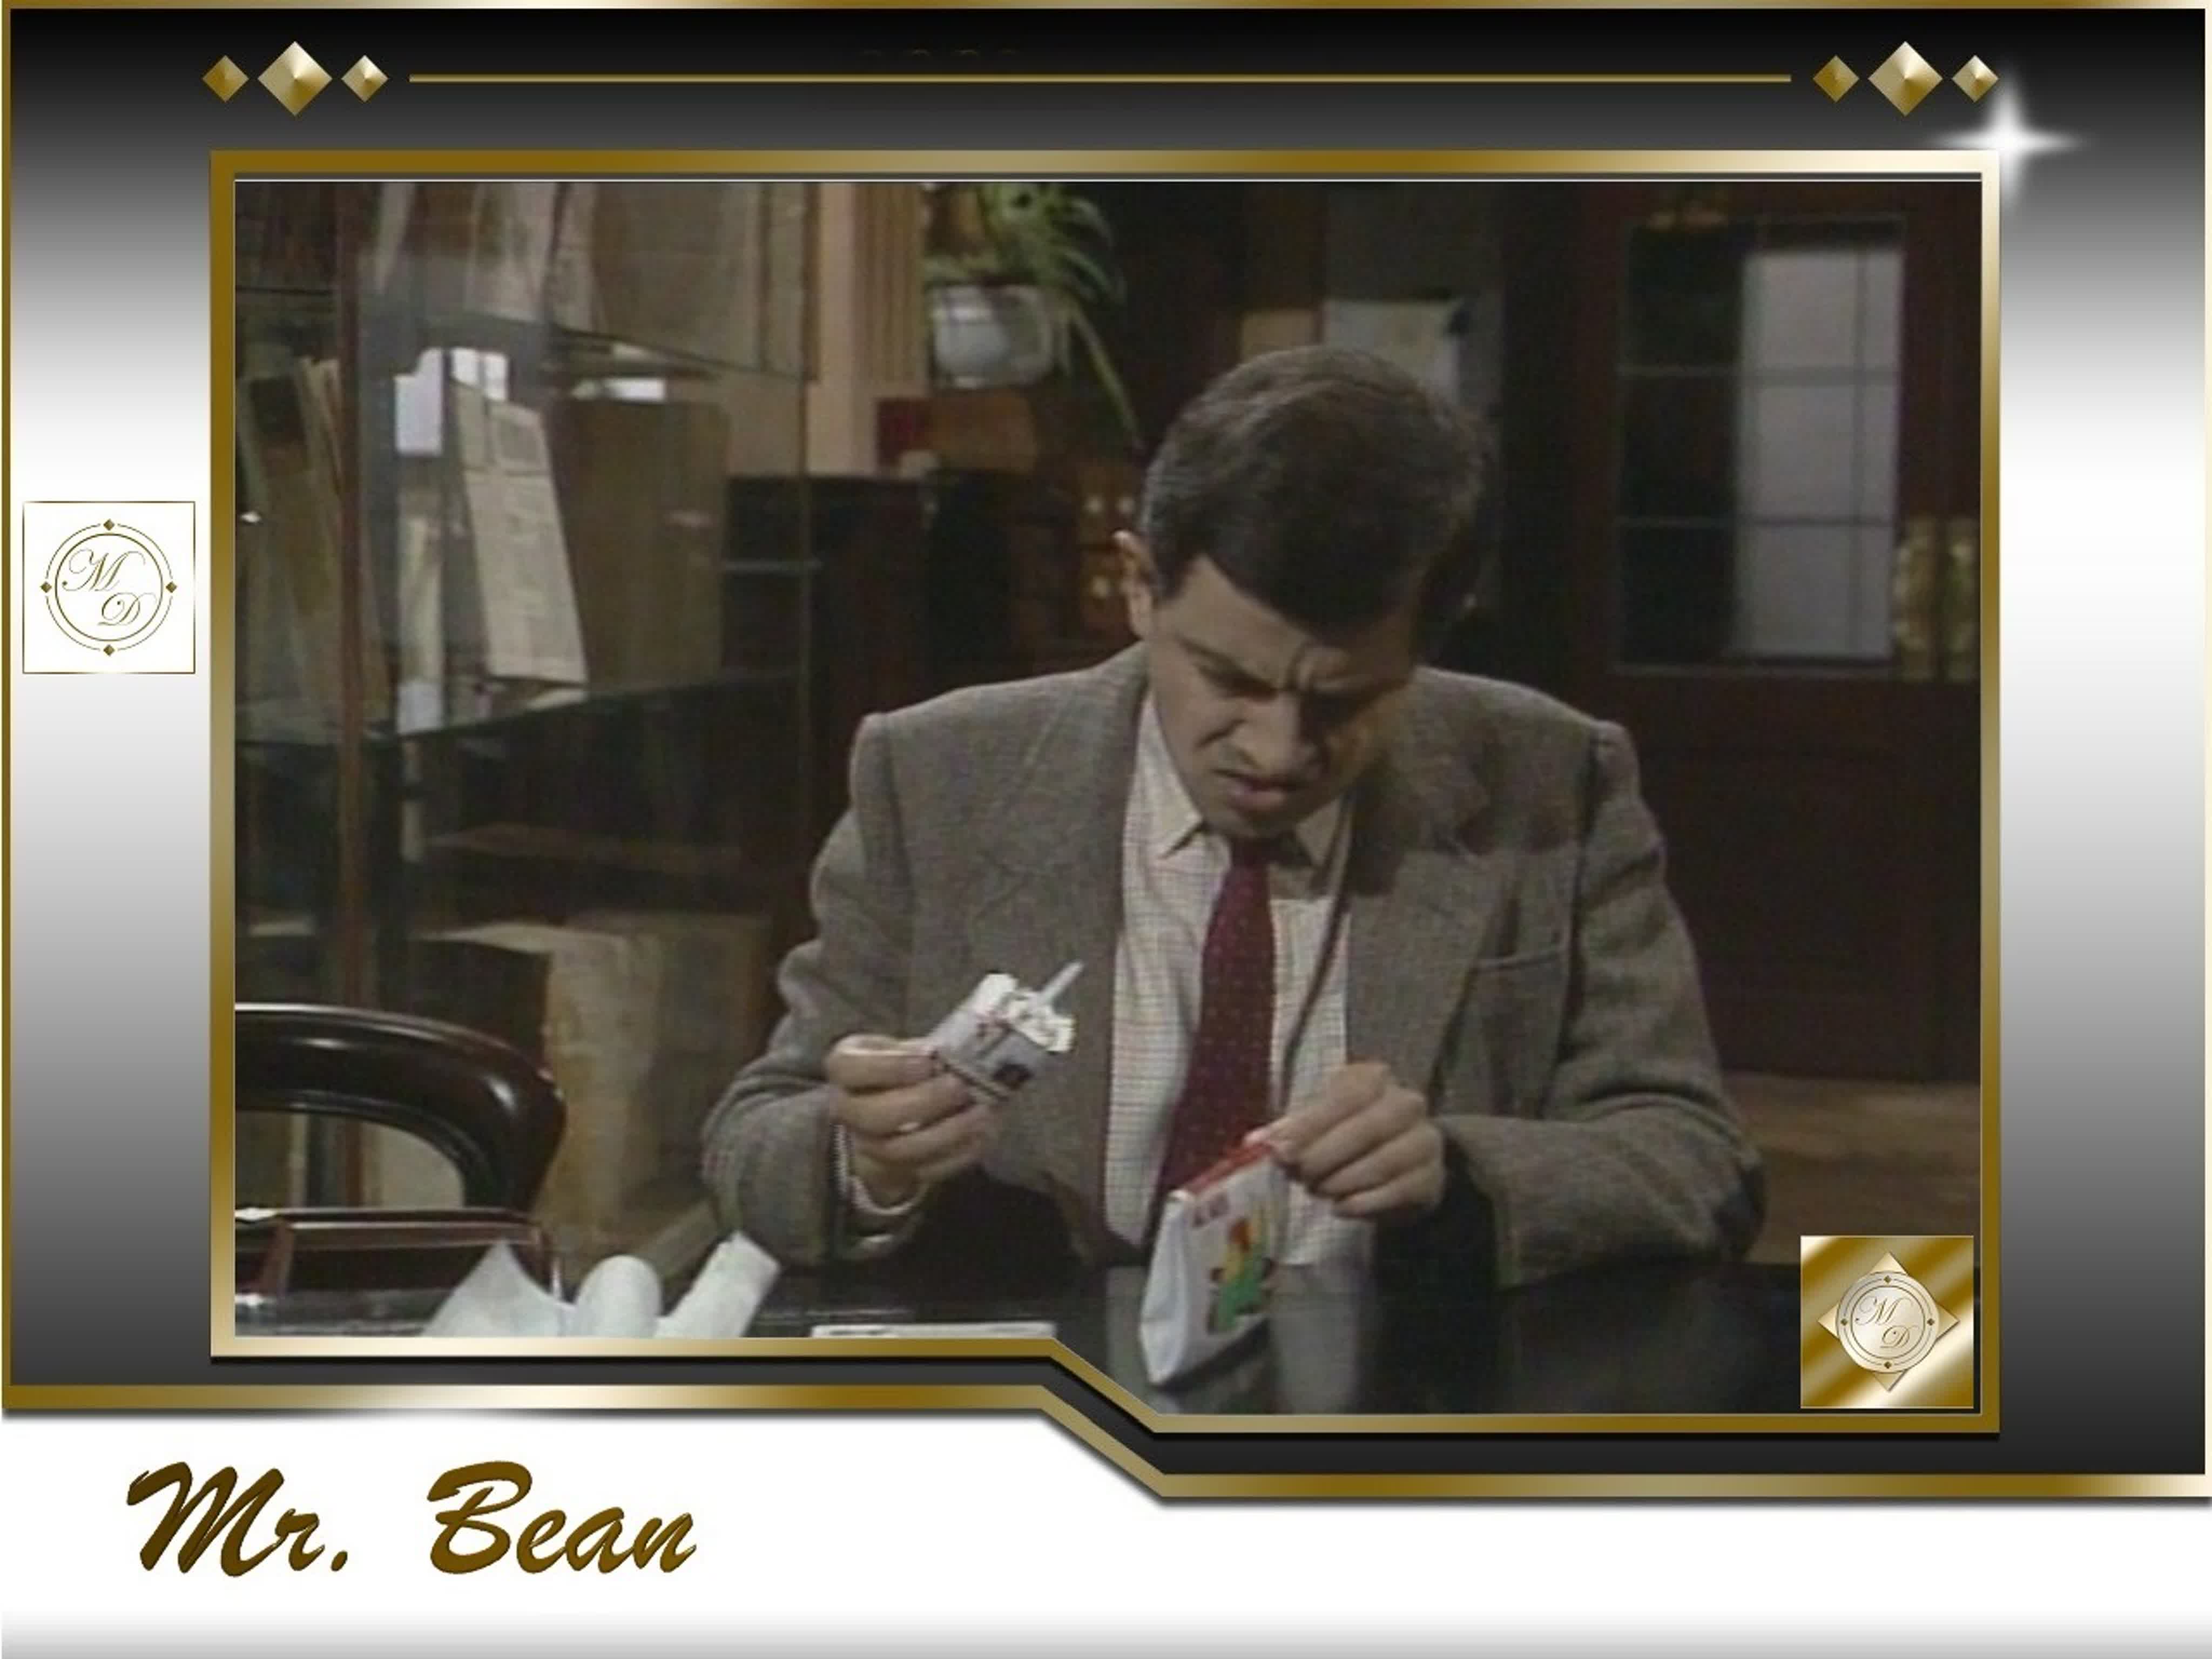 Mr. Bean (Tiger Aspect, UK, 1990-1995)